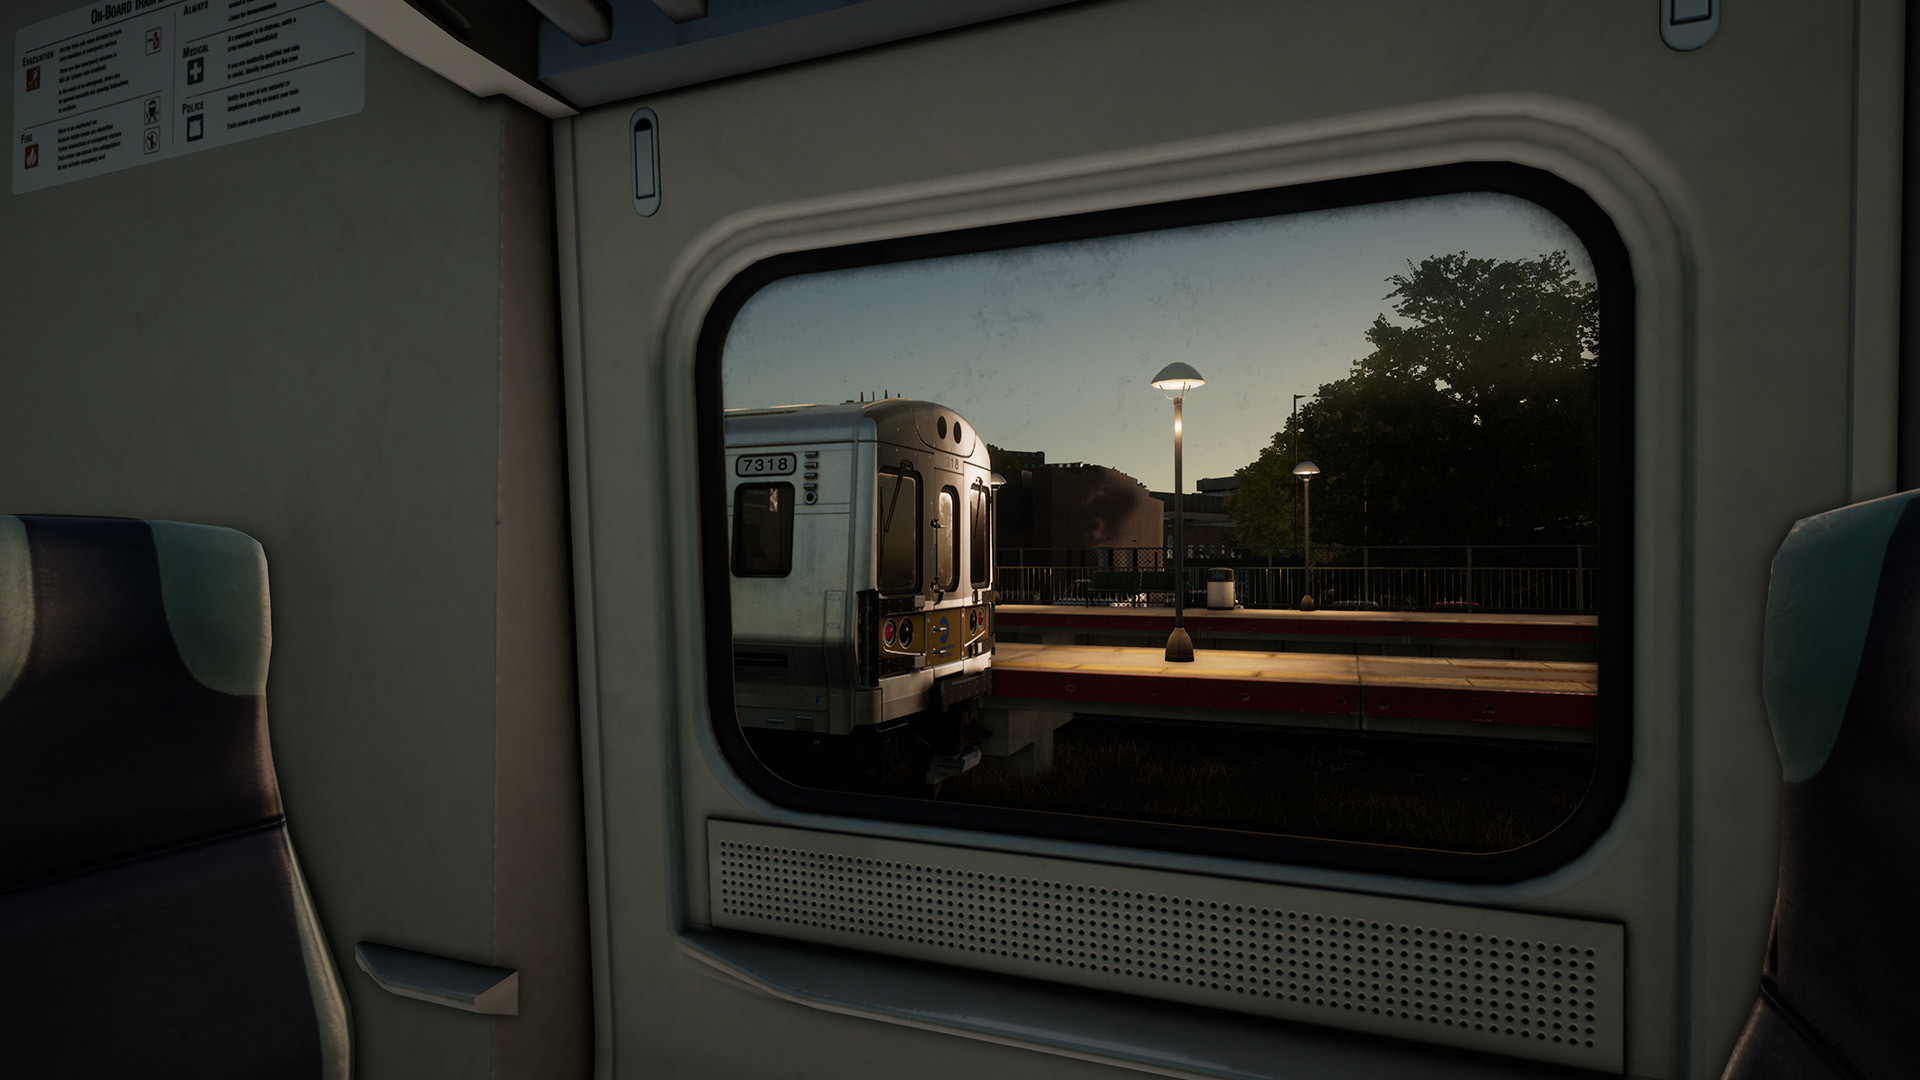 Train Sim World 2: Long Island Rail Road: New York - Hicksville Route Add-On DLC Steam CD Key, $5.63